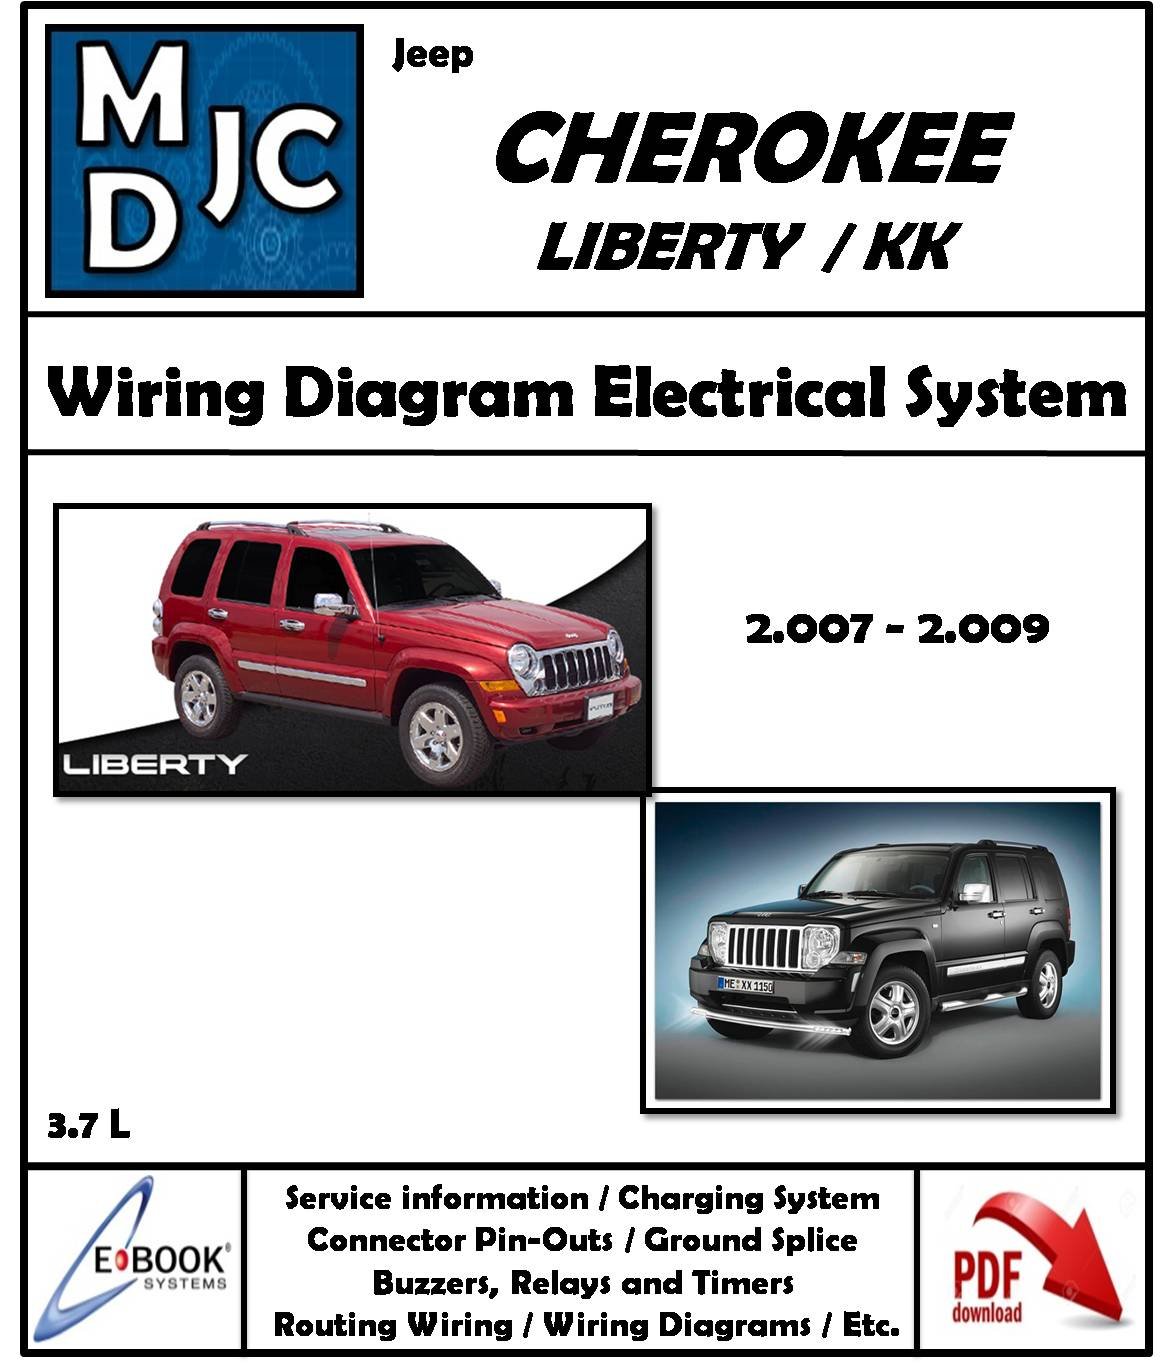 Diagramas de Cableado Sistema Eléctrico Jeep Cherokee Liberty KJ / KK  2007 - 2009